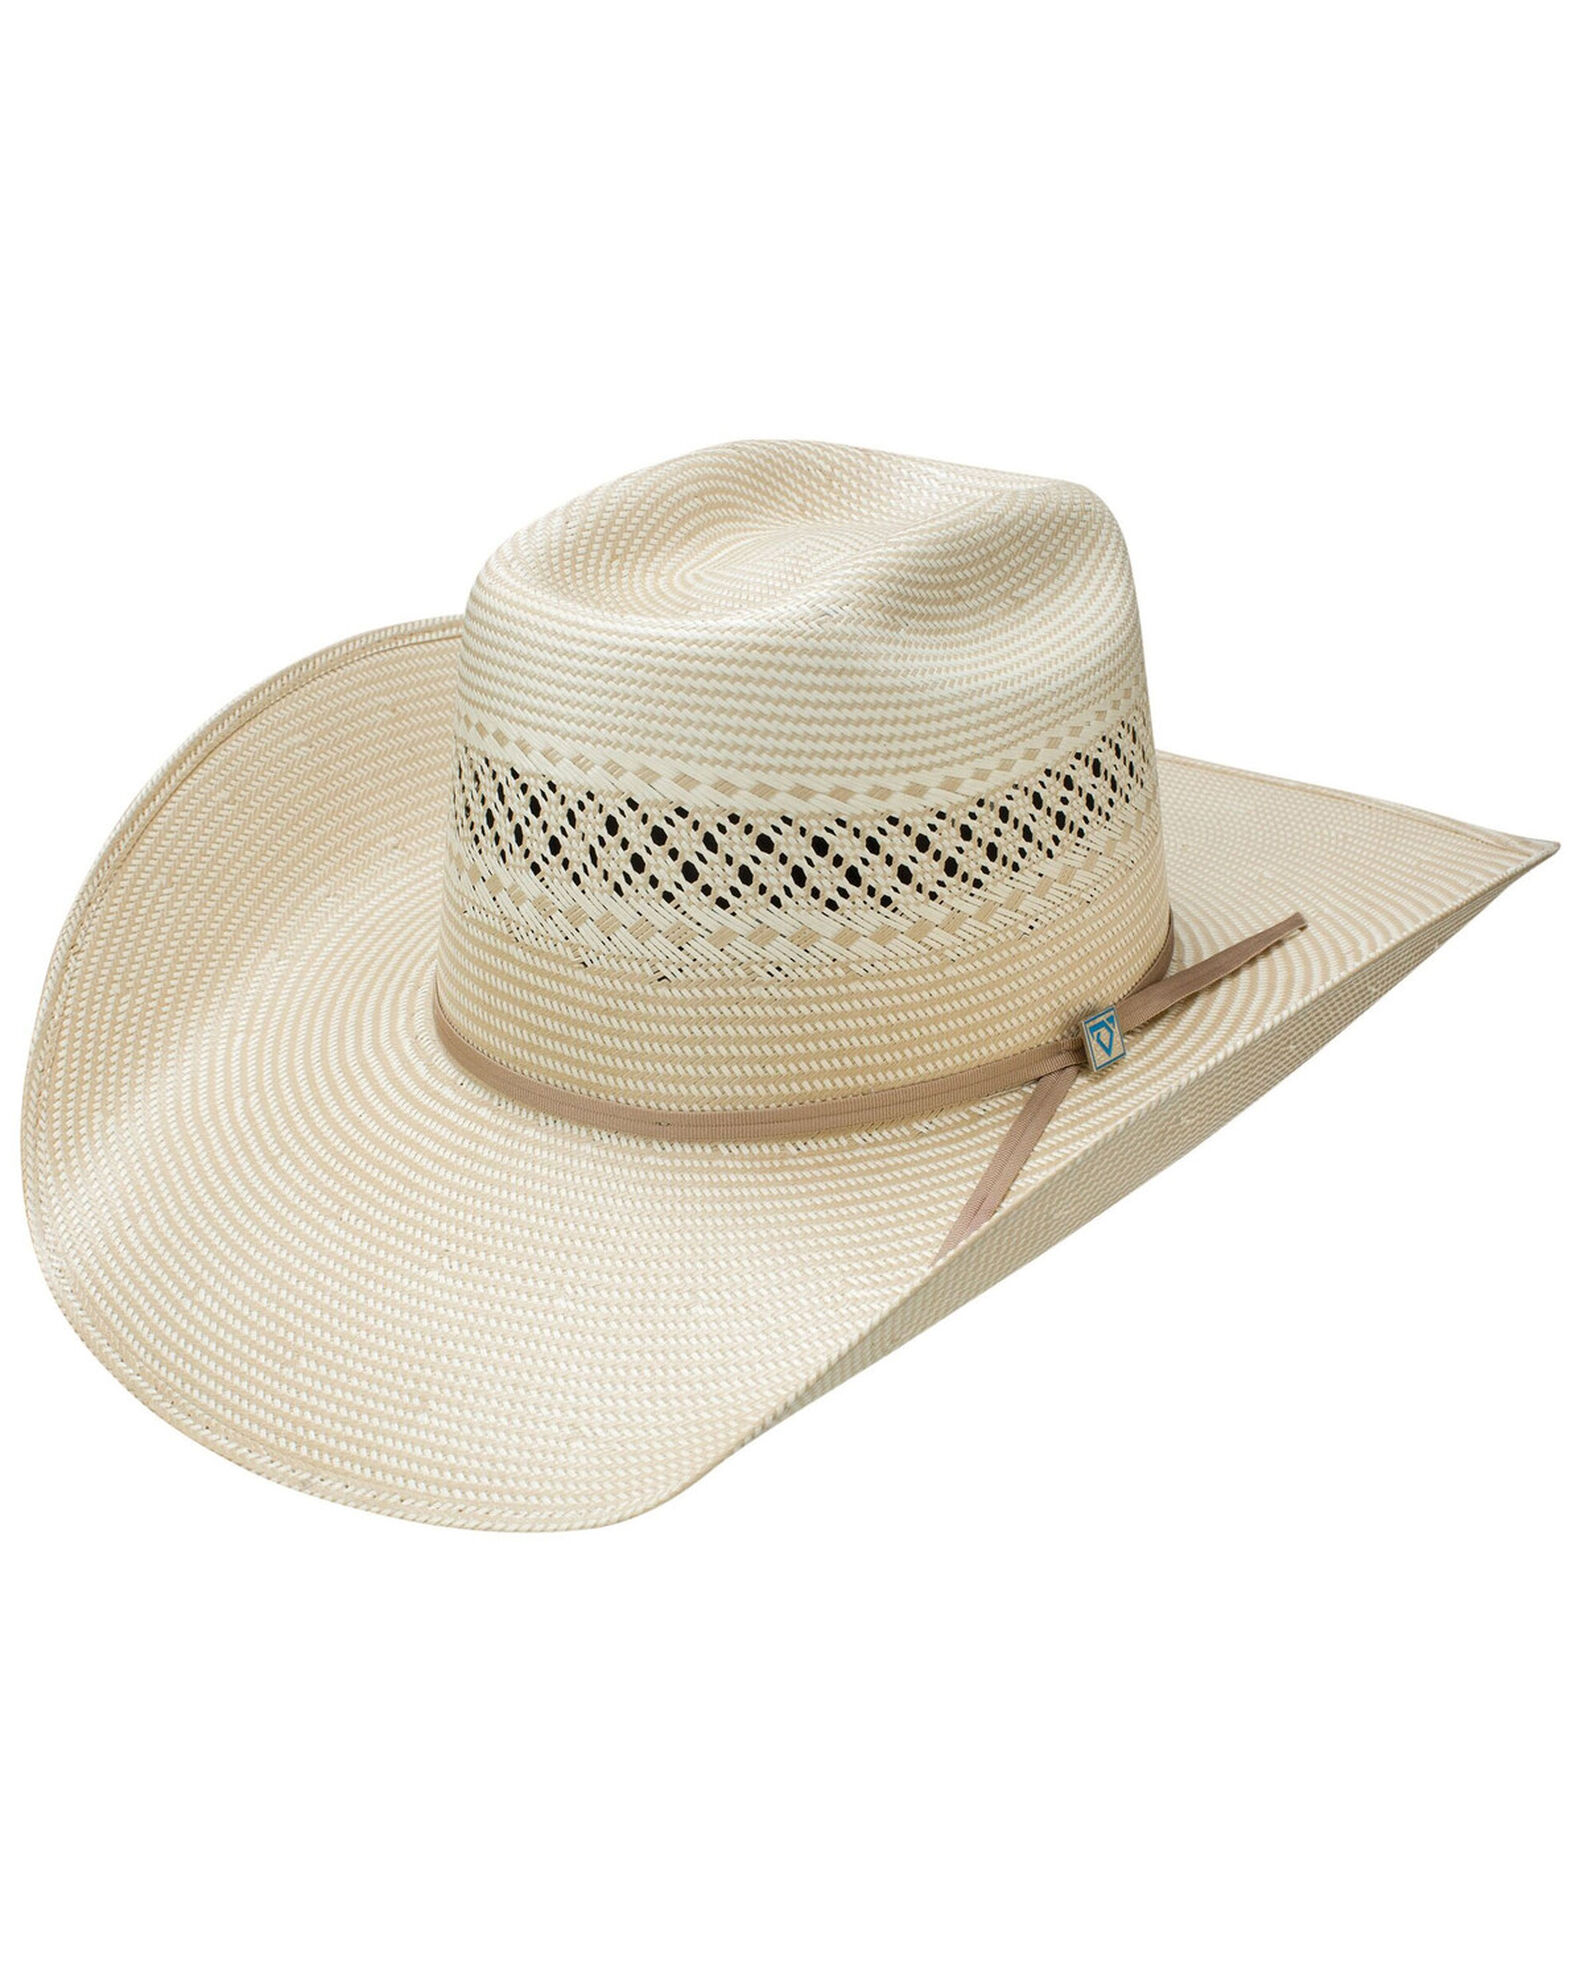 Resistol Men's Cojo Special Western Hat